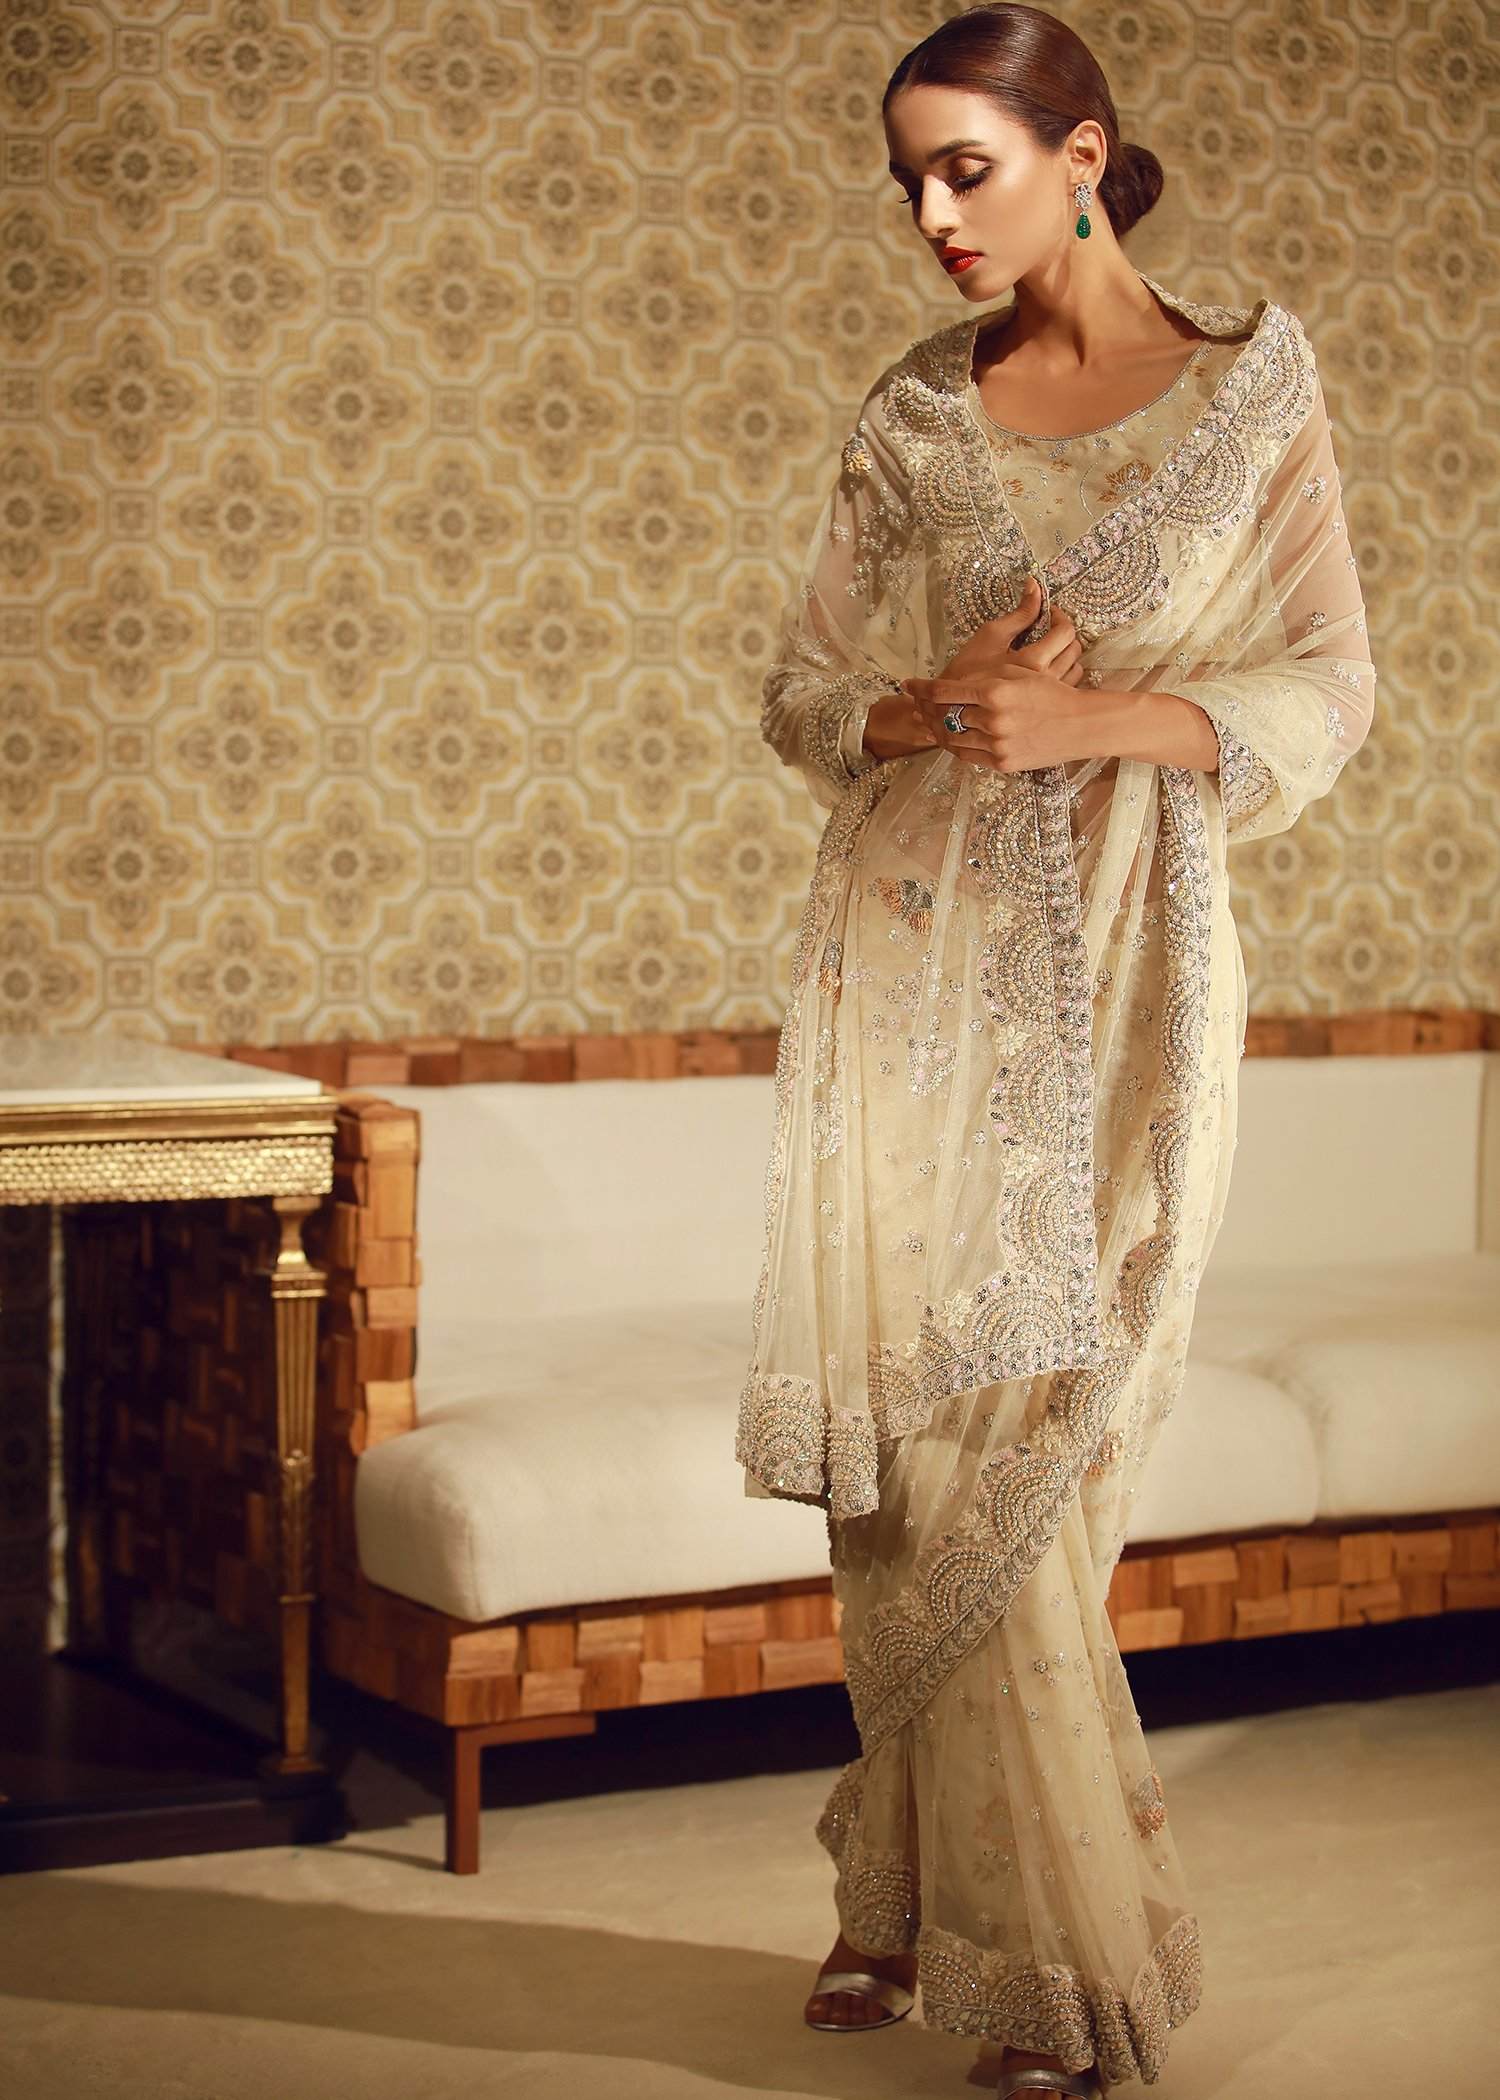 Tena Durrani Designer Pakistani Bridal Saree 2019